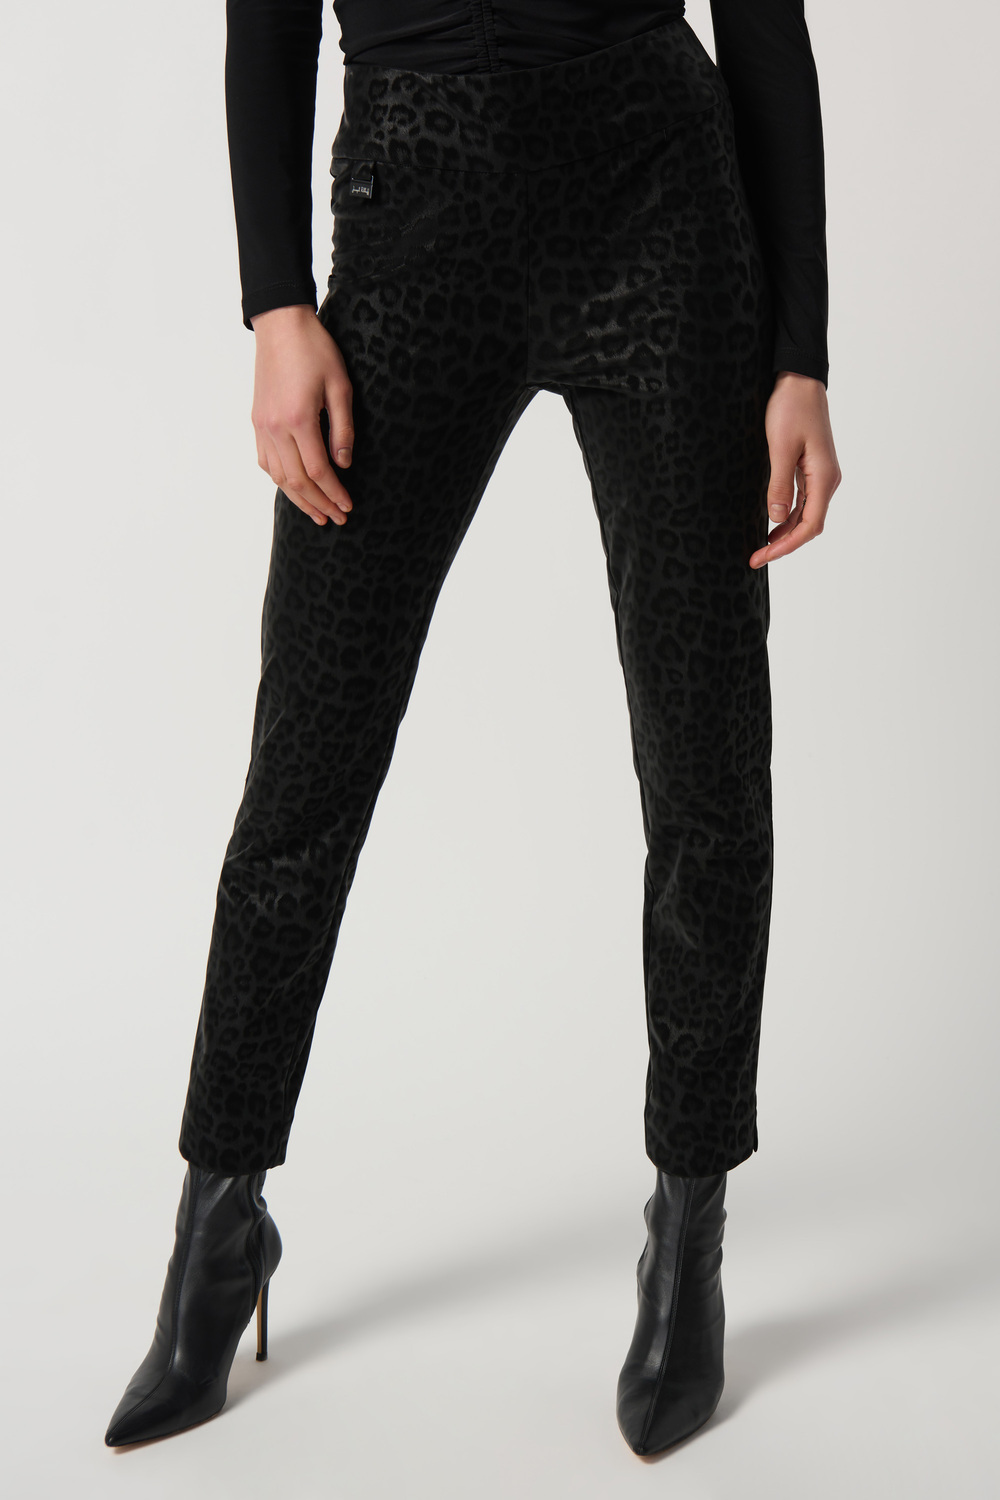 Leopard Print Pants Style 234900. Black